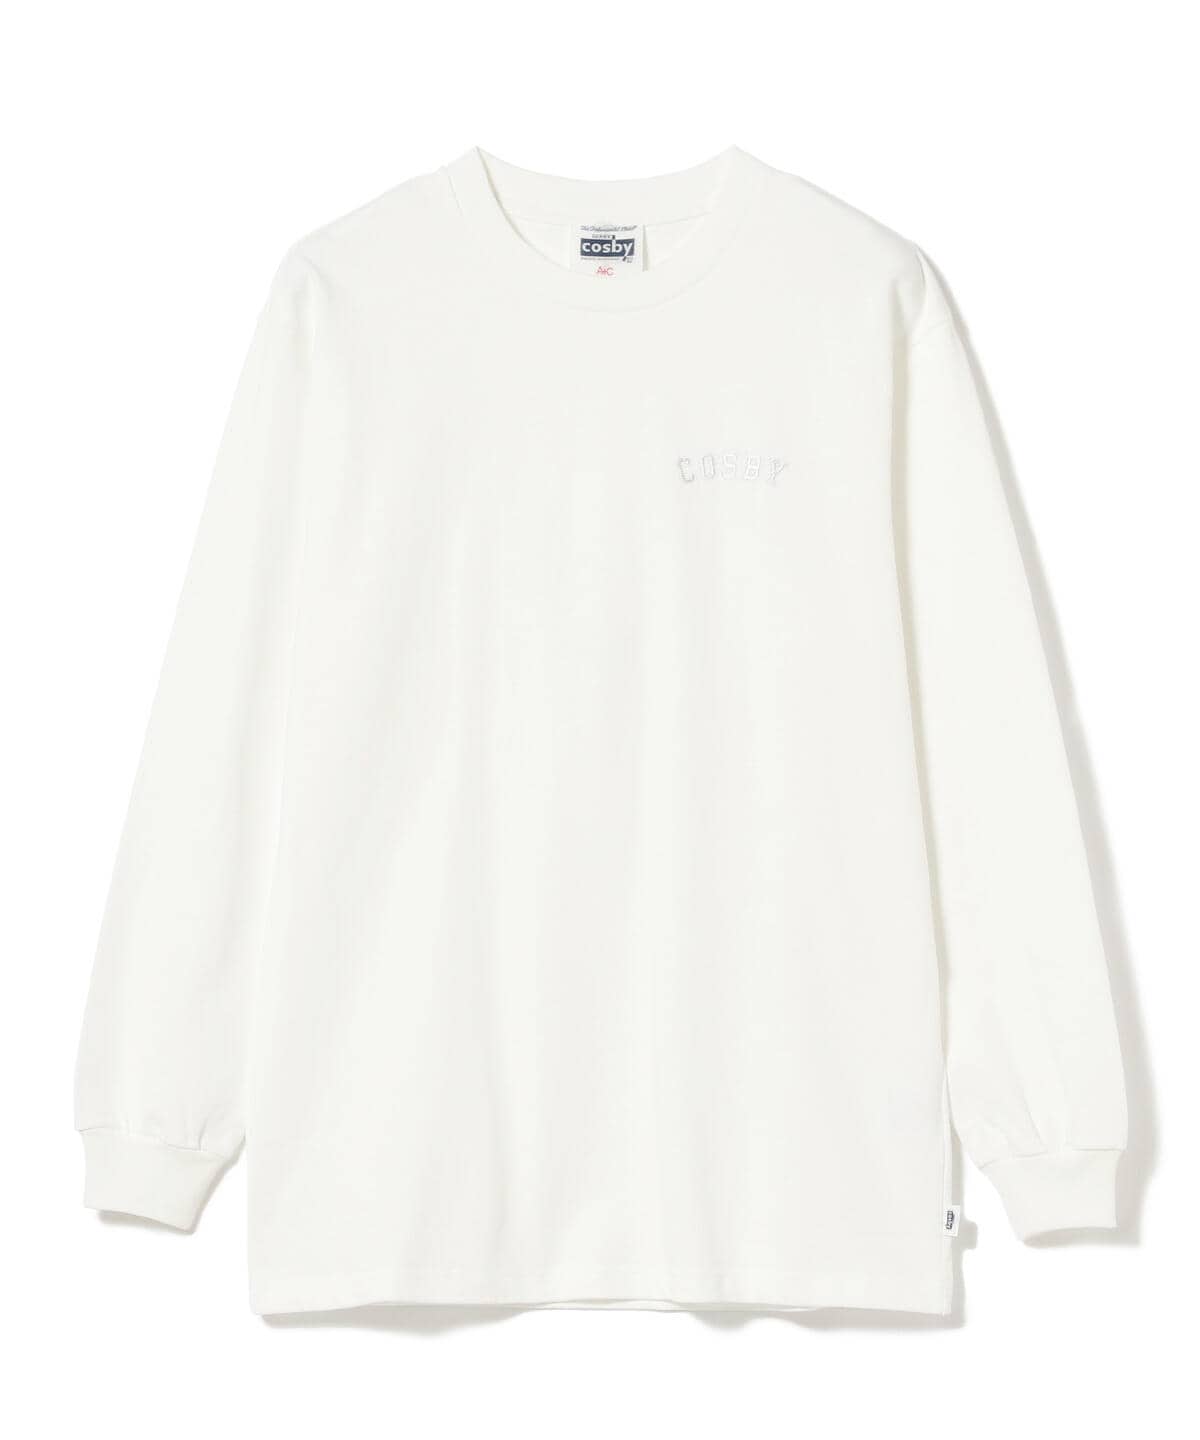 BEAMS（ビームス）Gerry Cosby A＋C / Garmentdye Long Sleeve T-Shirt